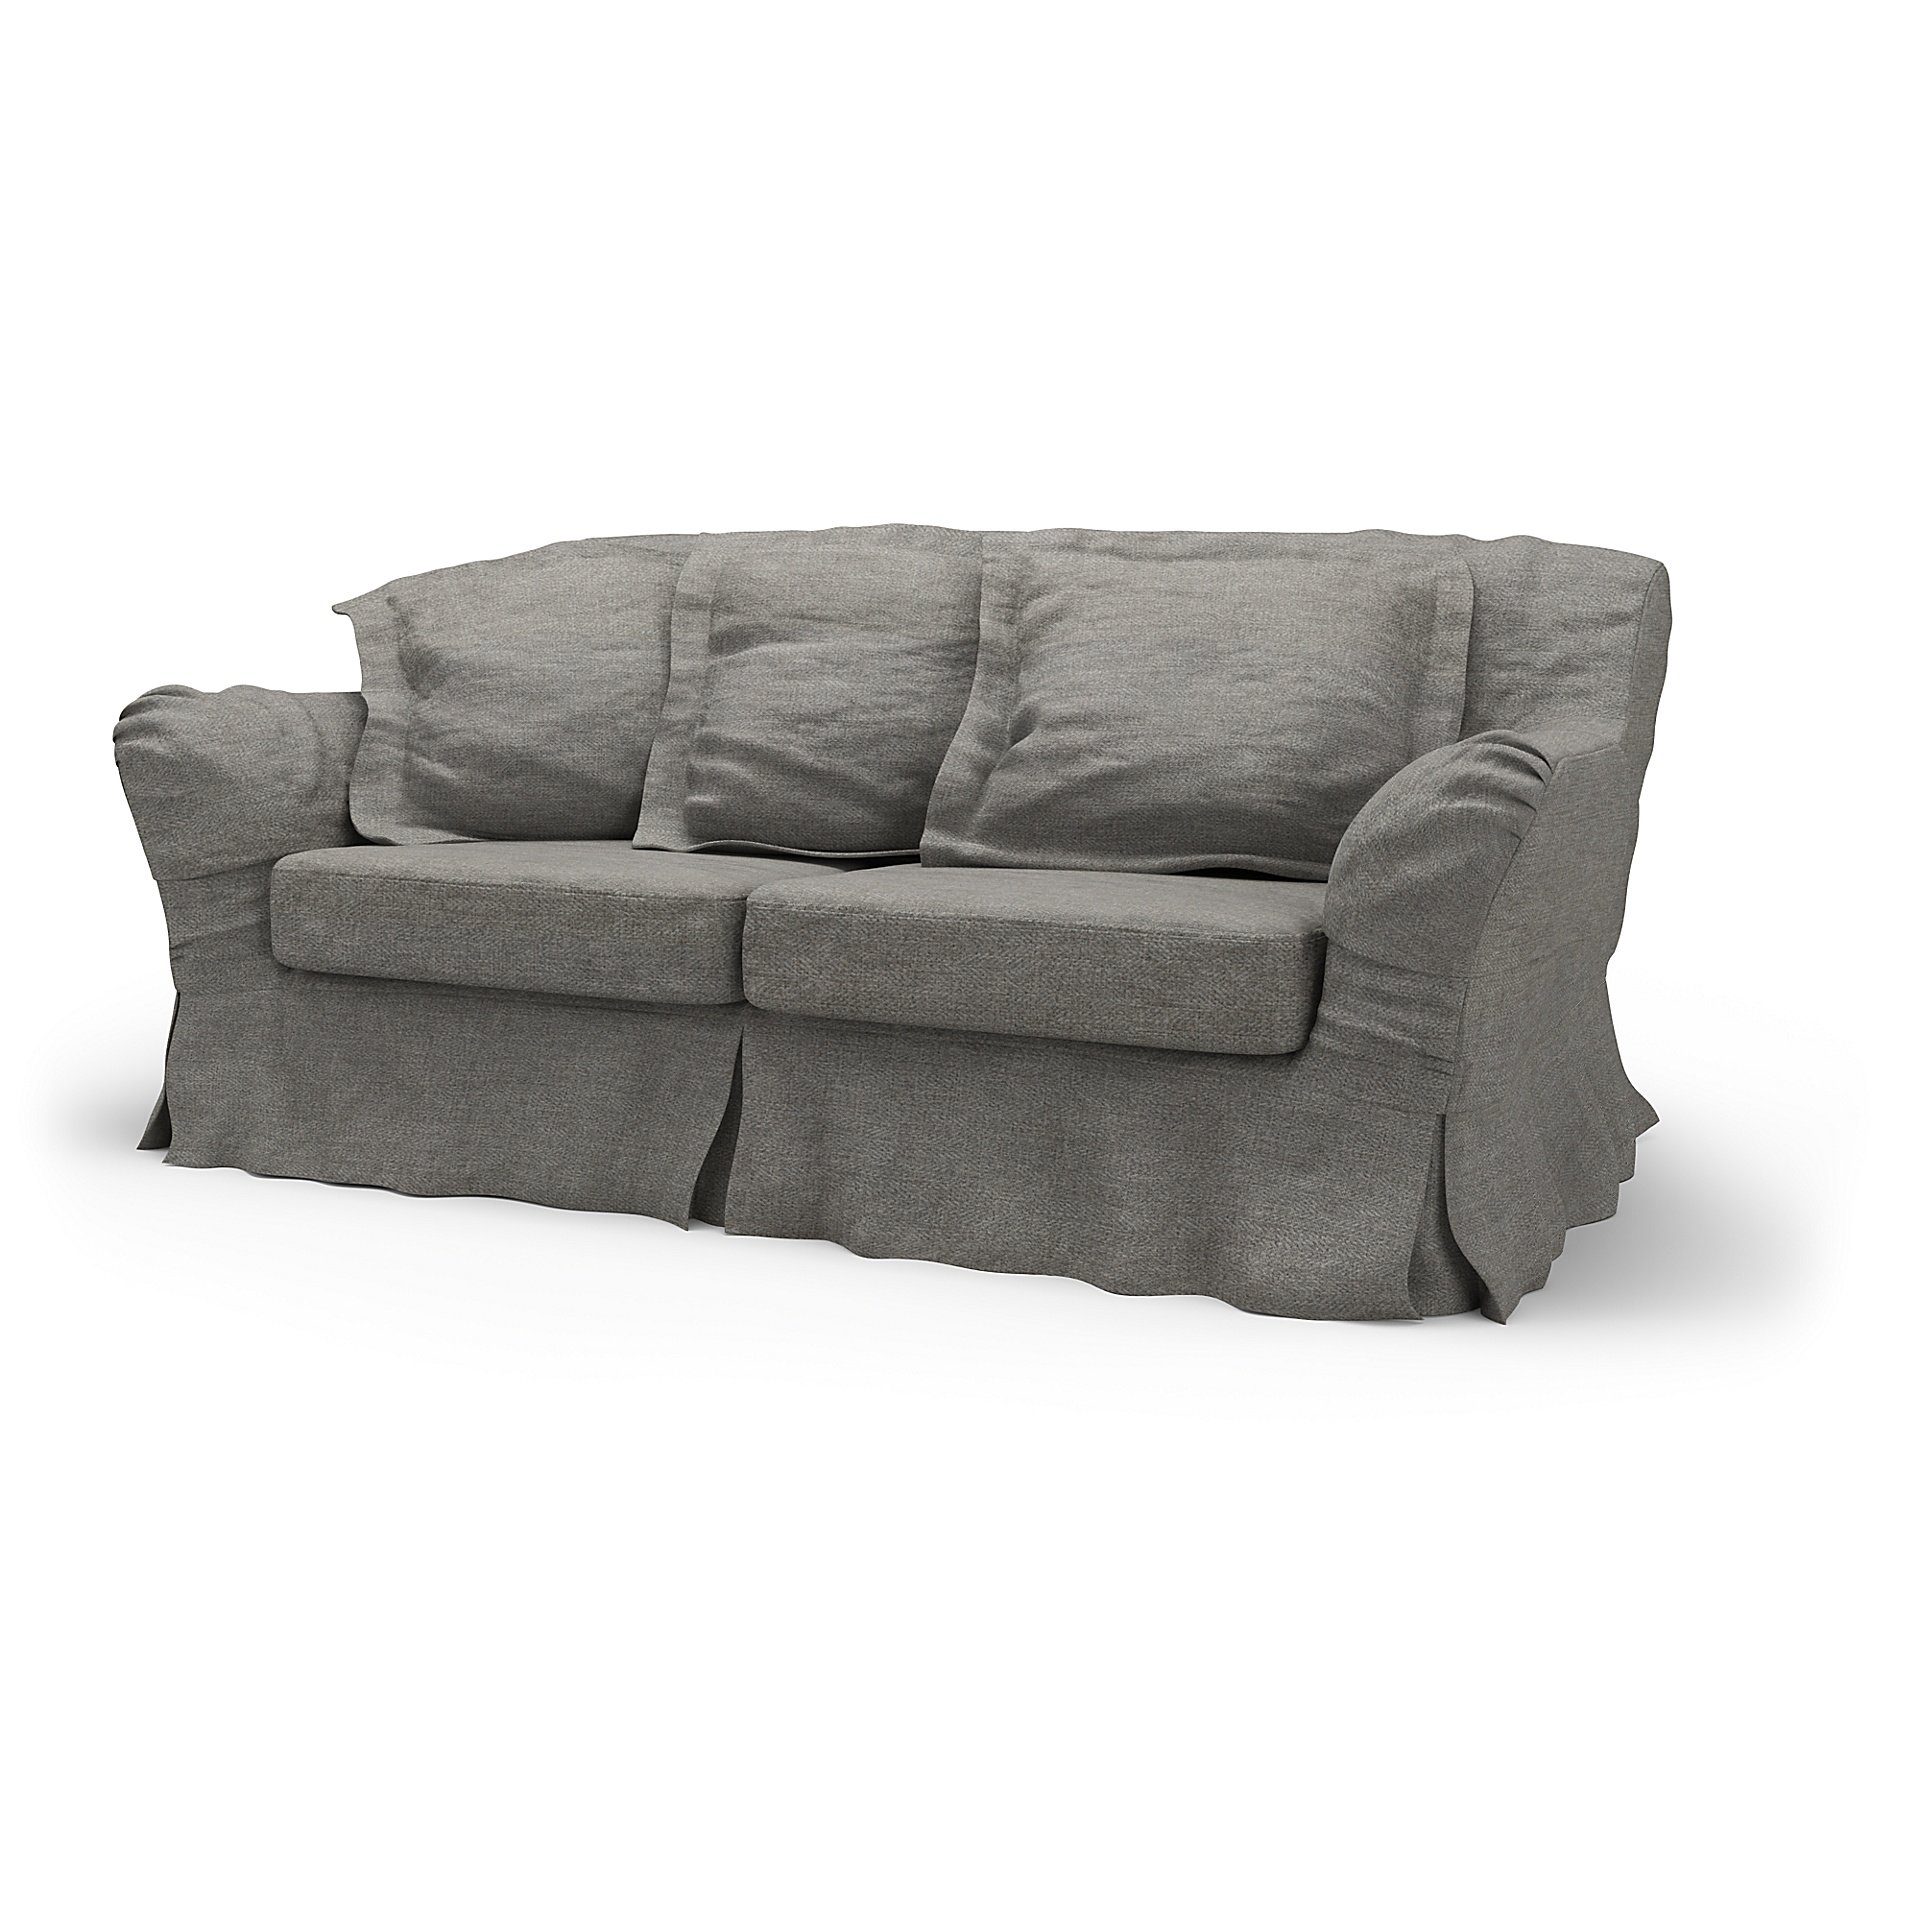 IKEA - Tomelilla 2 Seater Sofa Cover, Taupe, Boucle & Texture - Bemz